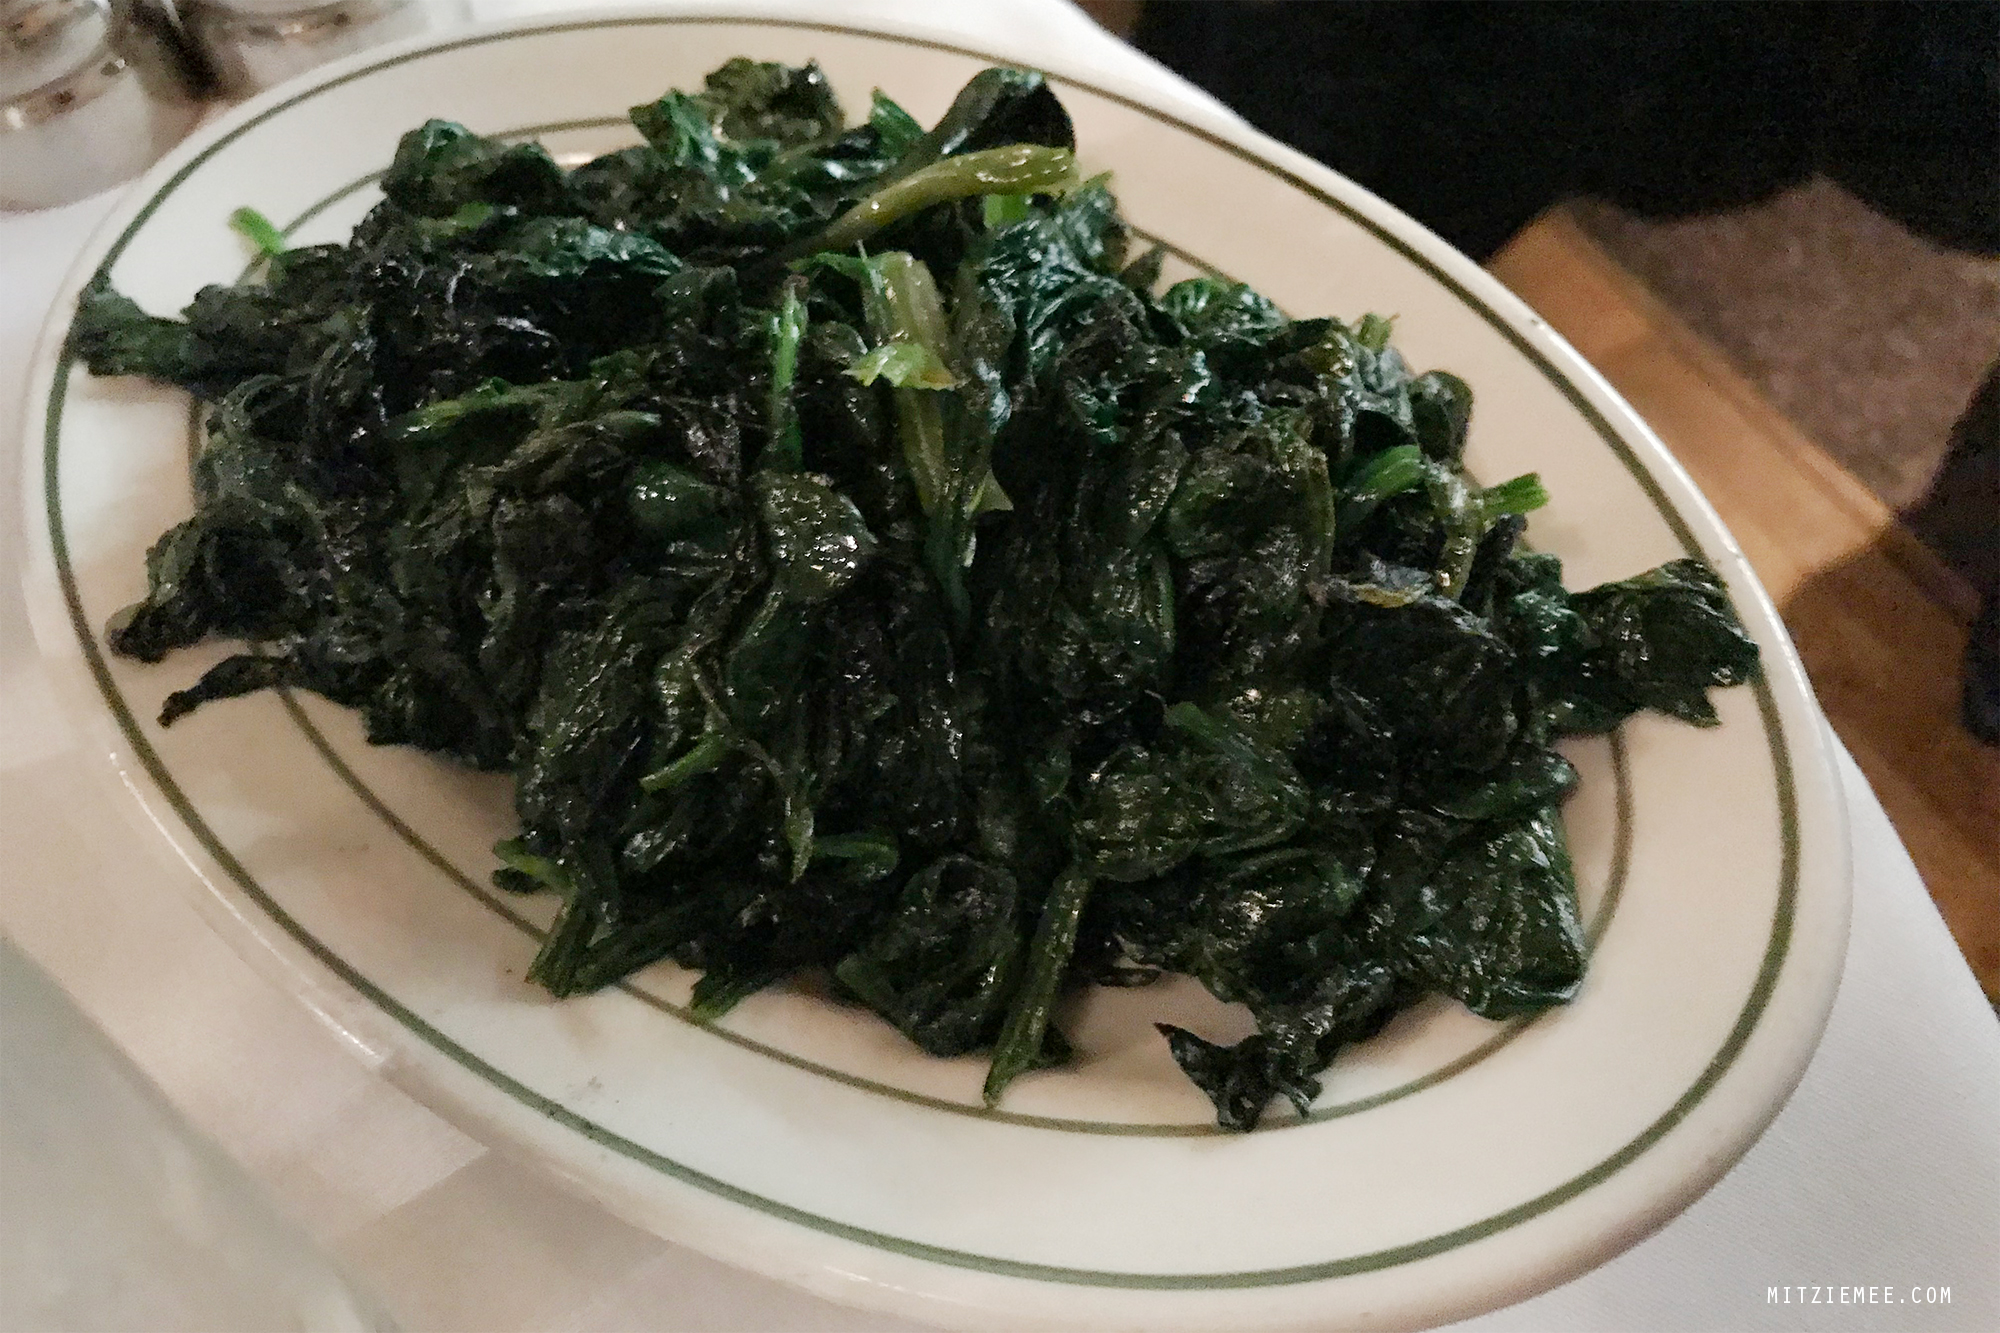 Sautéed spinach at Smith & Wollensky, New York